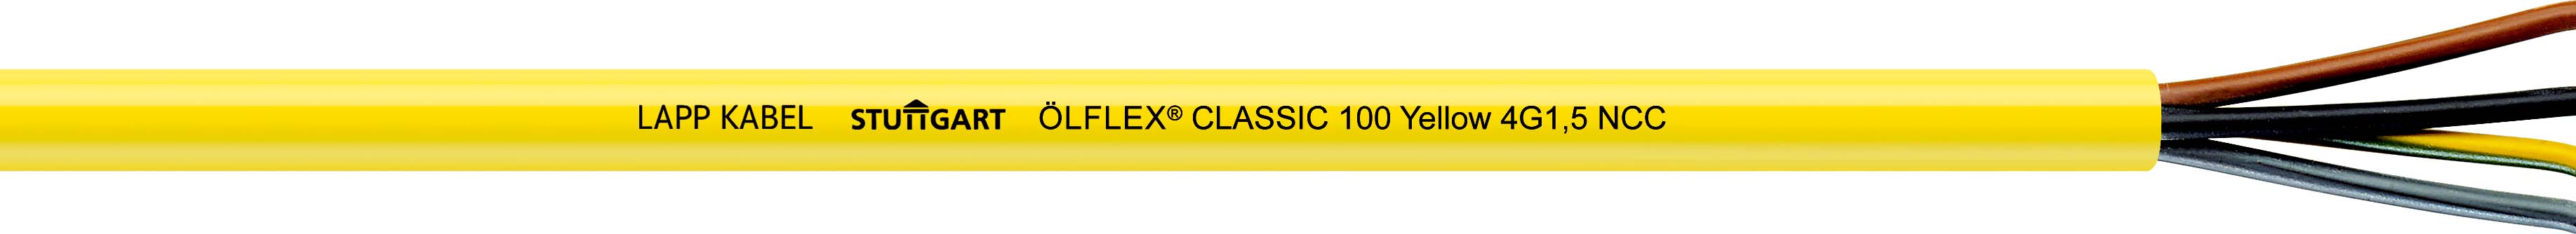 Lapp Kabel&Leitung ÖLFLEX CLASSIC 100 YELLOW 3G1,5 0010400 T500